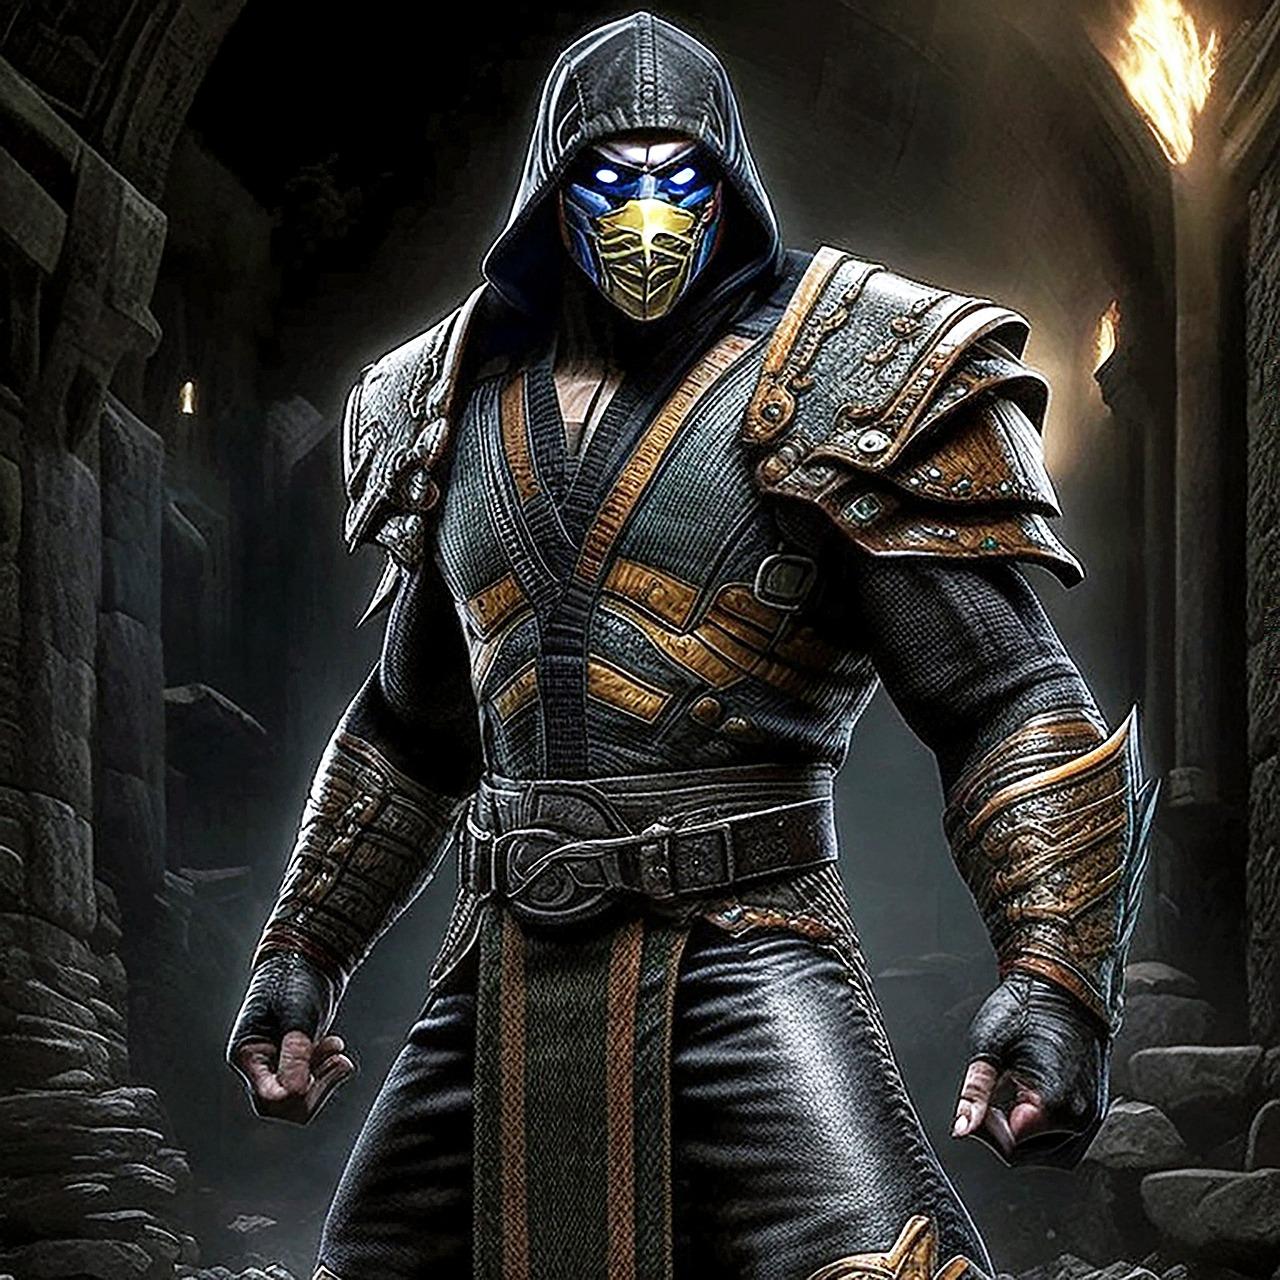 Is Mortal Kombat Komplete Edition the same as Mortal Kombat 9?